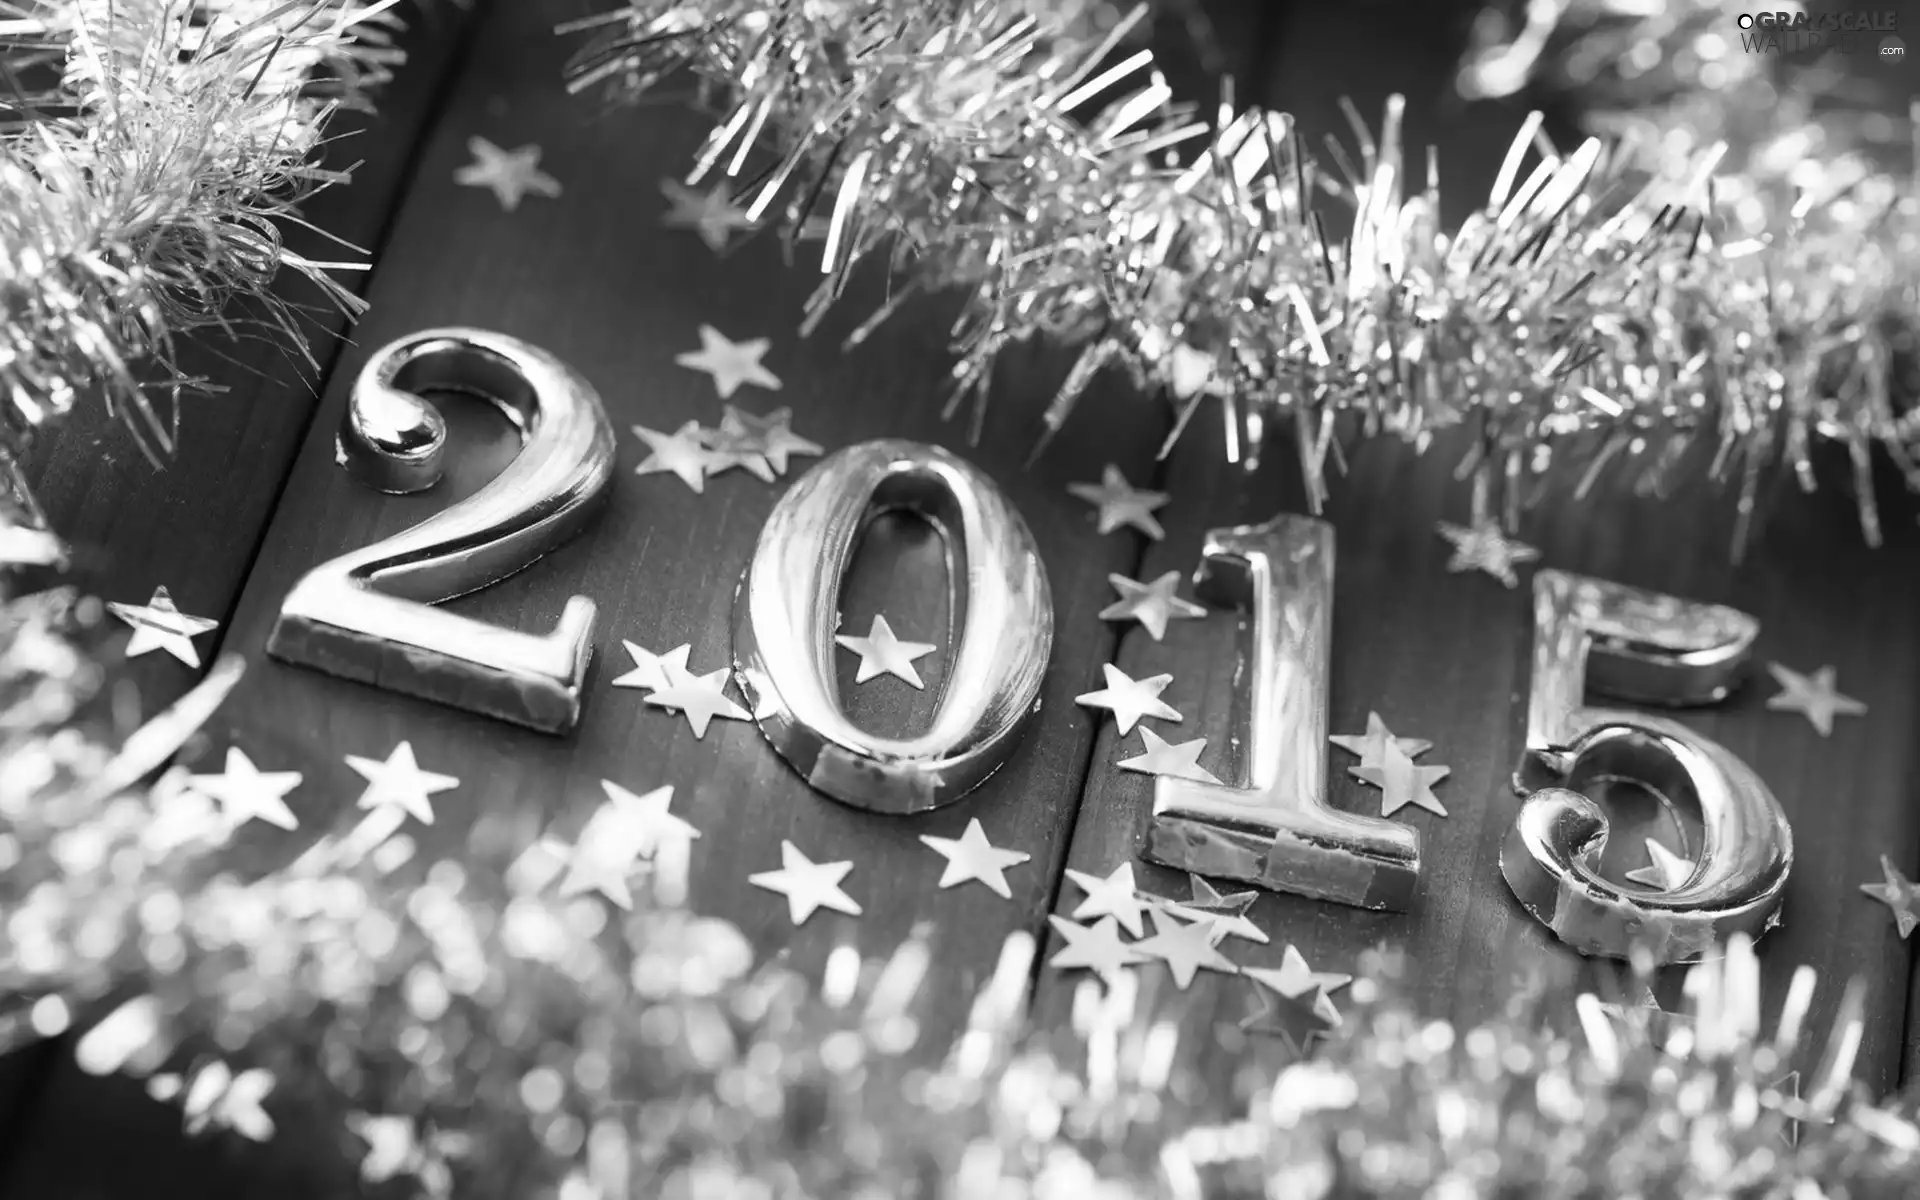 Stars, ornamentation, 2015, strings, New Year